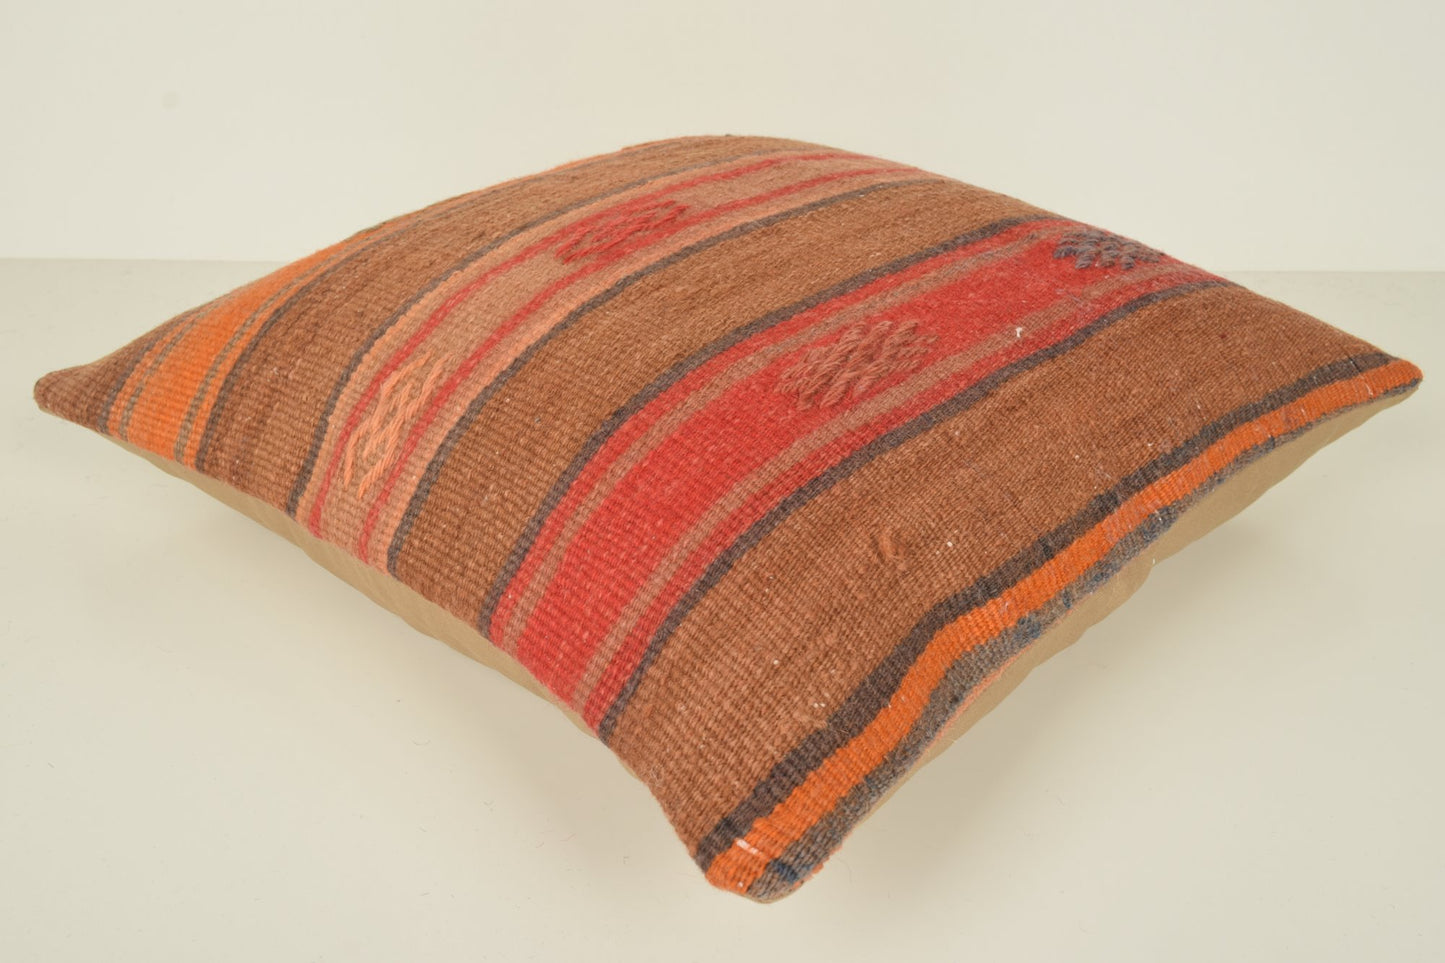 Kilim Pillow Covers Etsy C01381 18x18 Furnishing Berber Knit